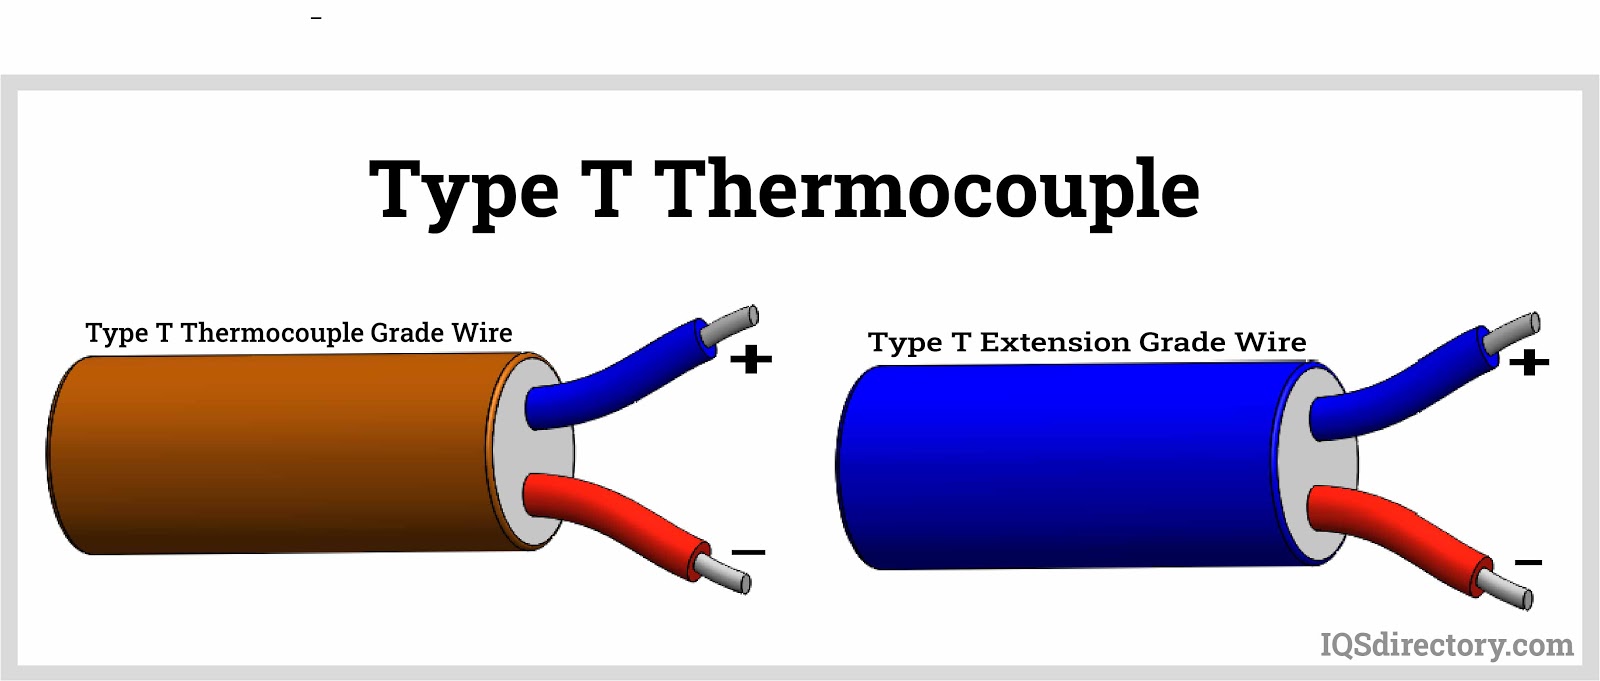 Type T Thermocouple